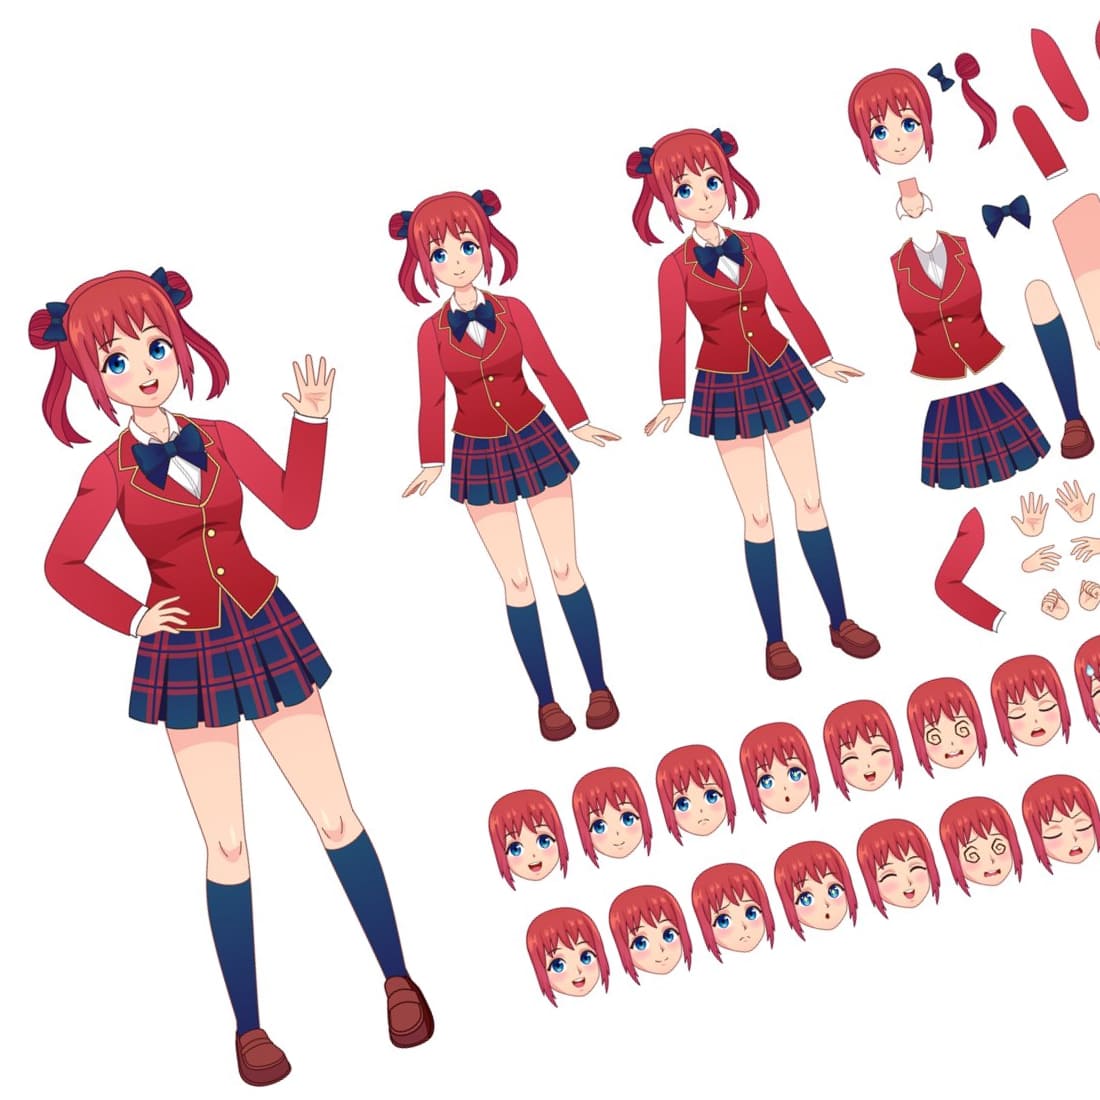 Japanese Style Anime Schoolgirl Uniform - Tokyo Dreams